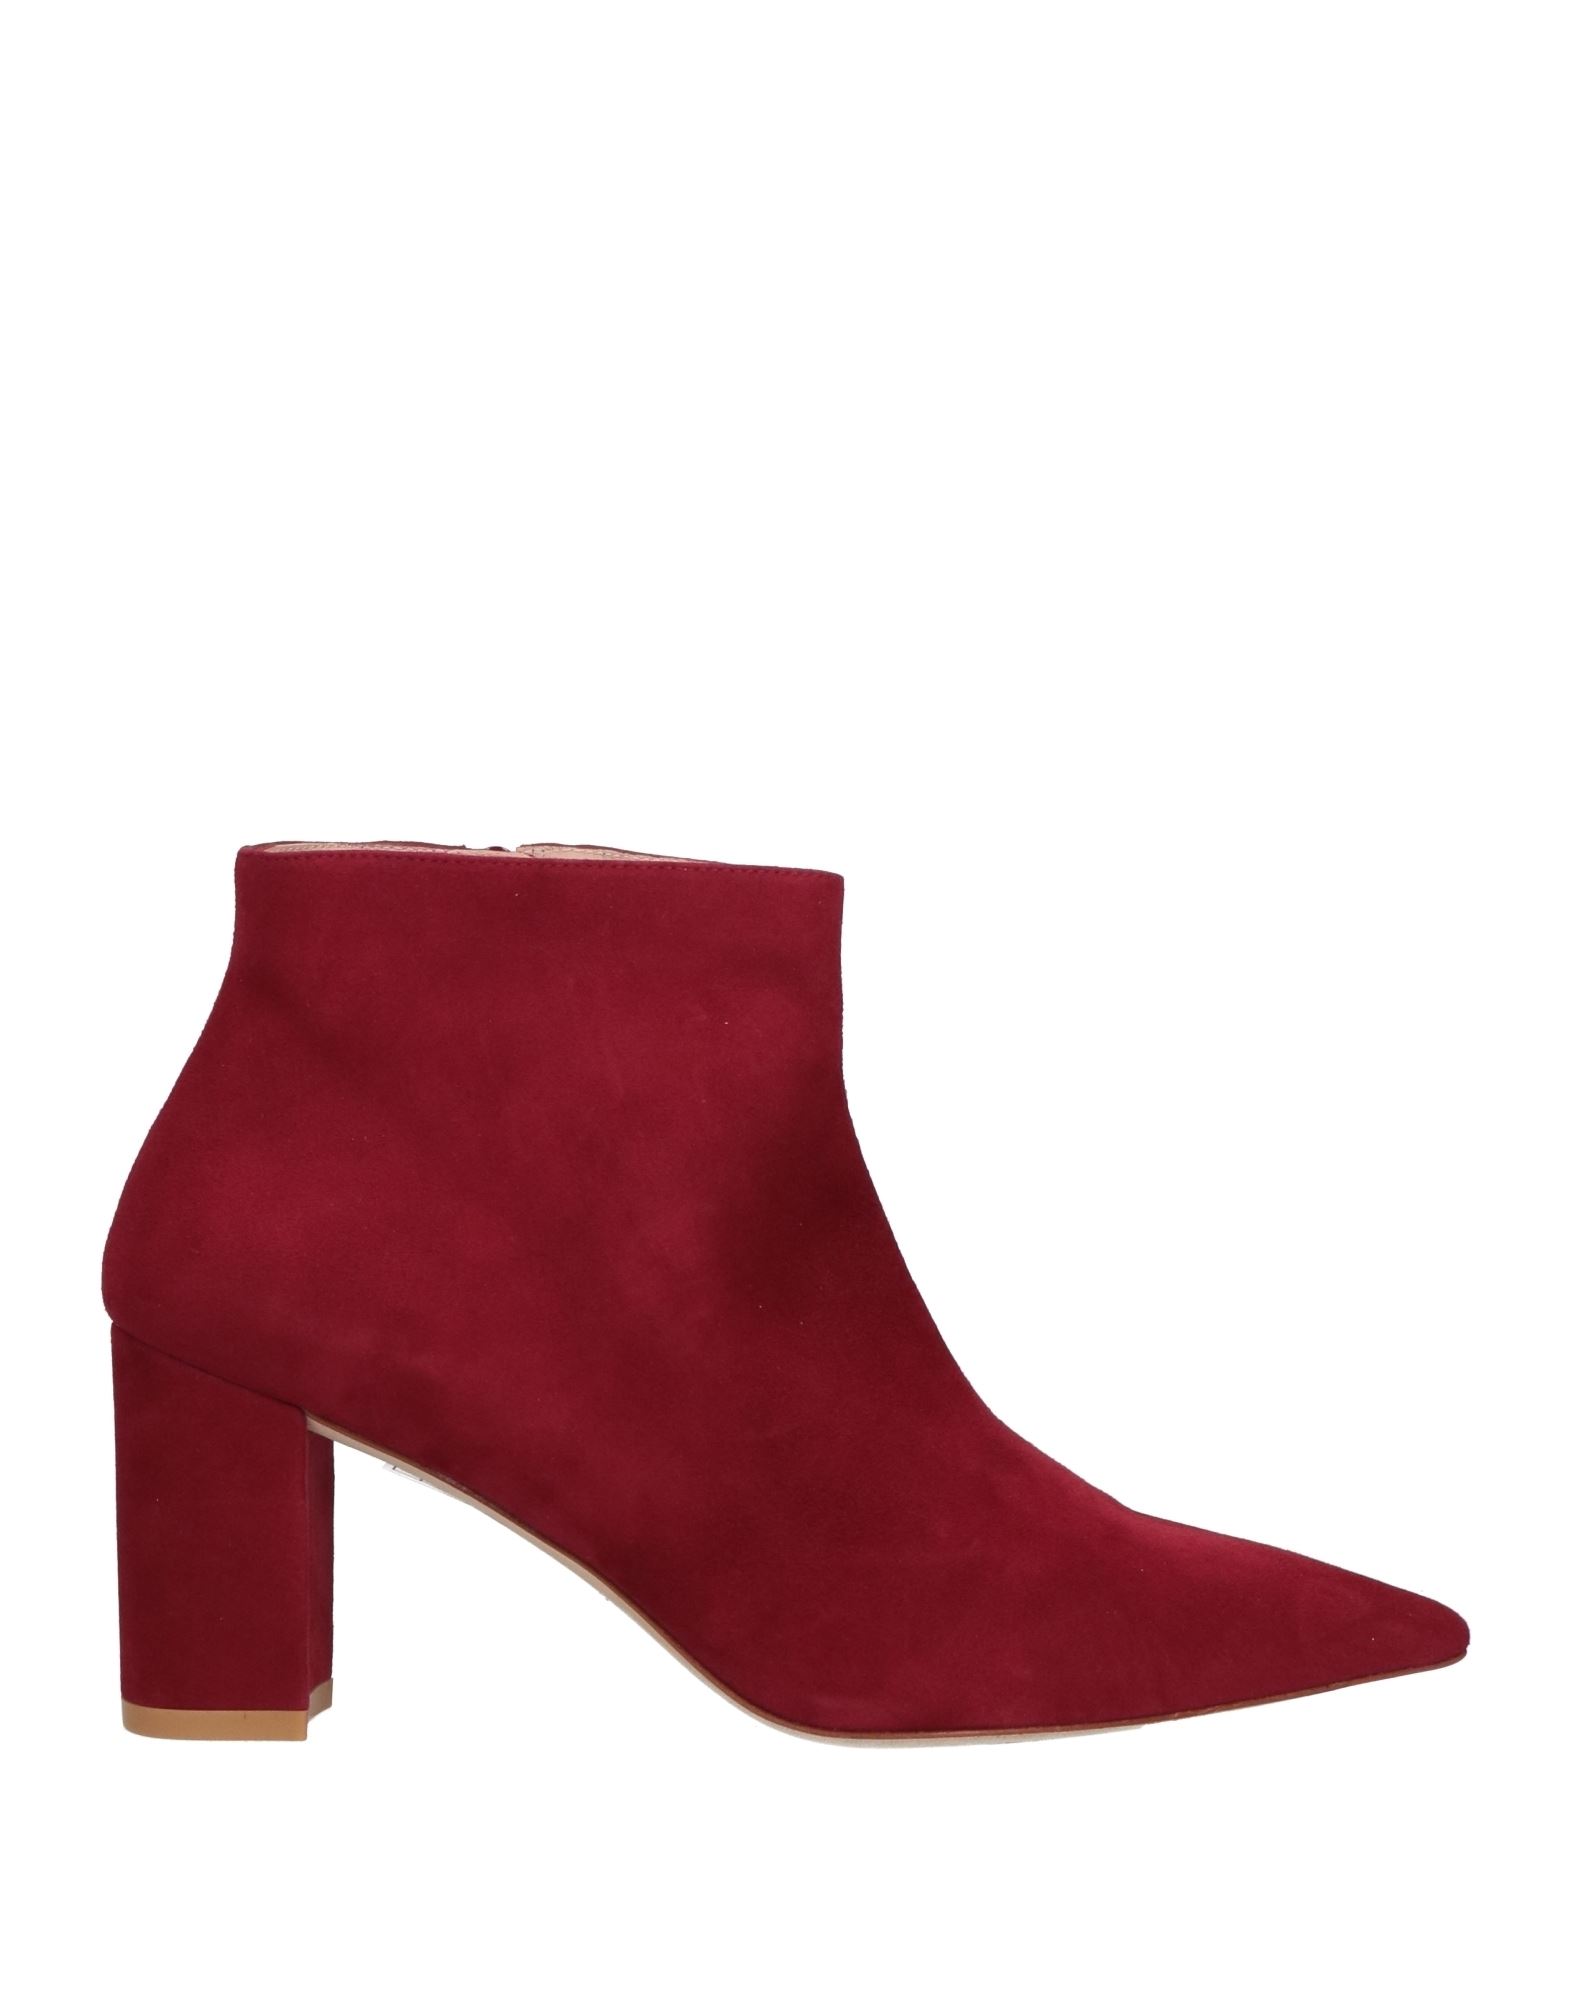 Shop Stuart Weitzman Woman Ankle Boots Brick Red Size 6.5 Soft Leather